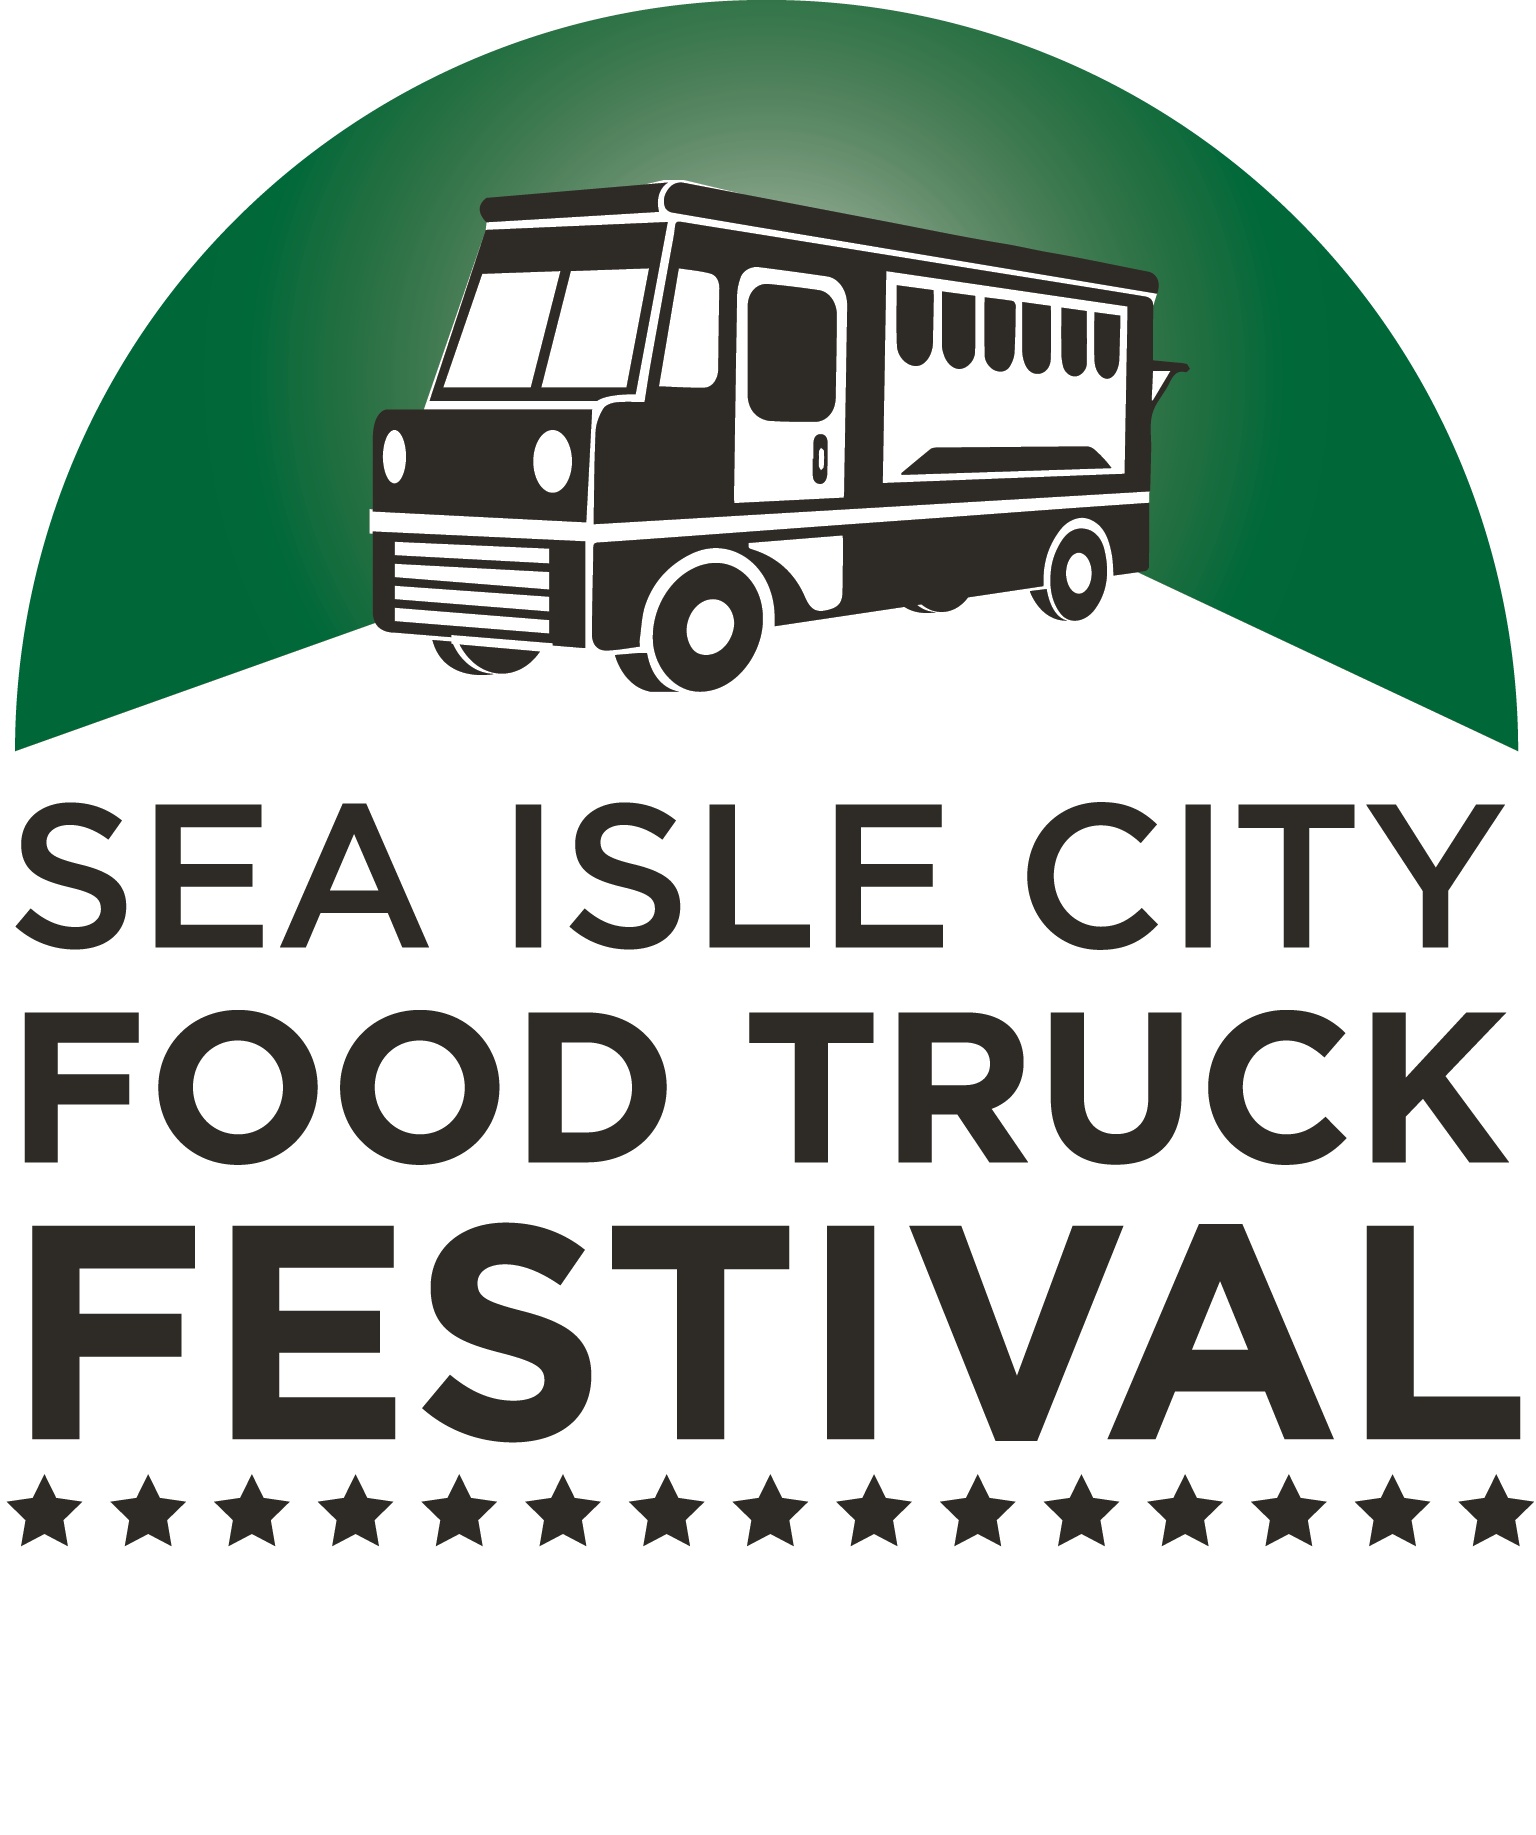 Sea Isle City Food Truck Festival SponsorMyEvent